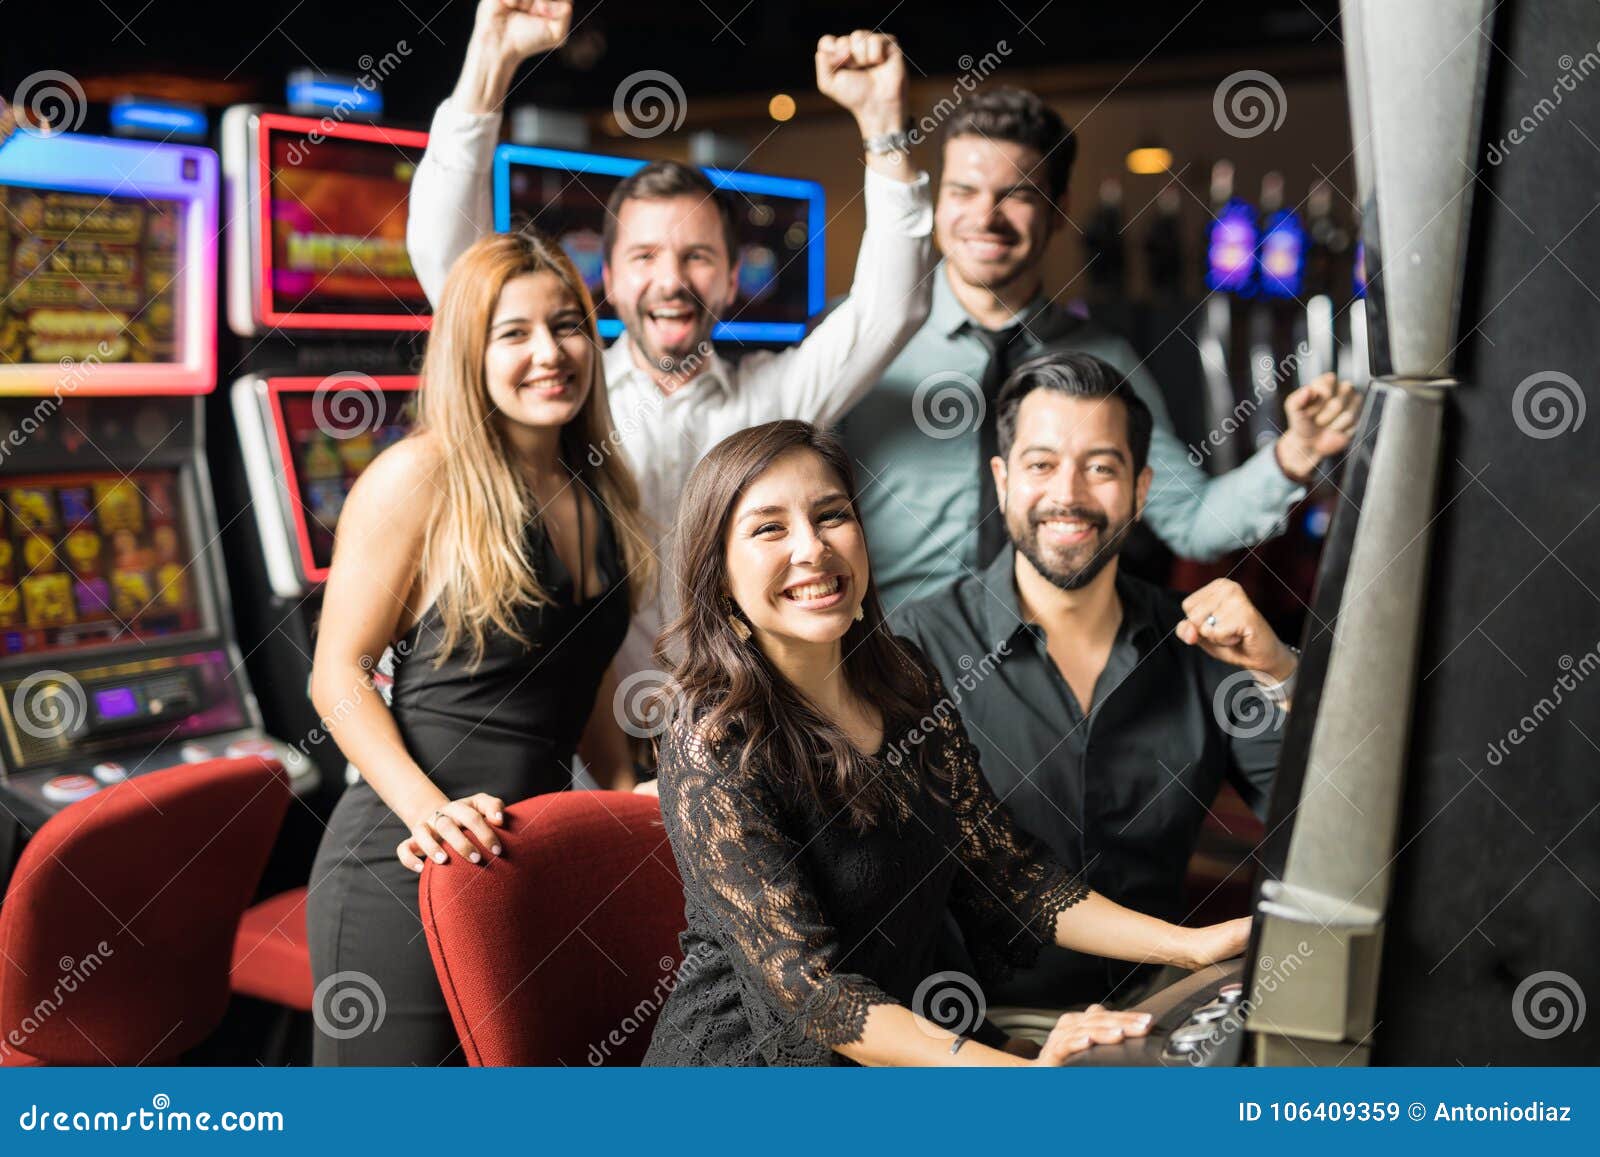 Casino And Friends